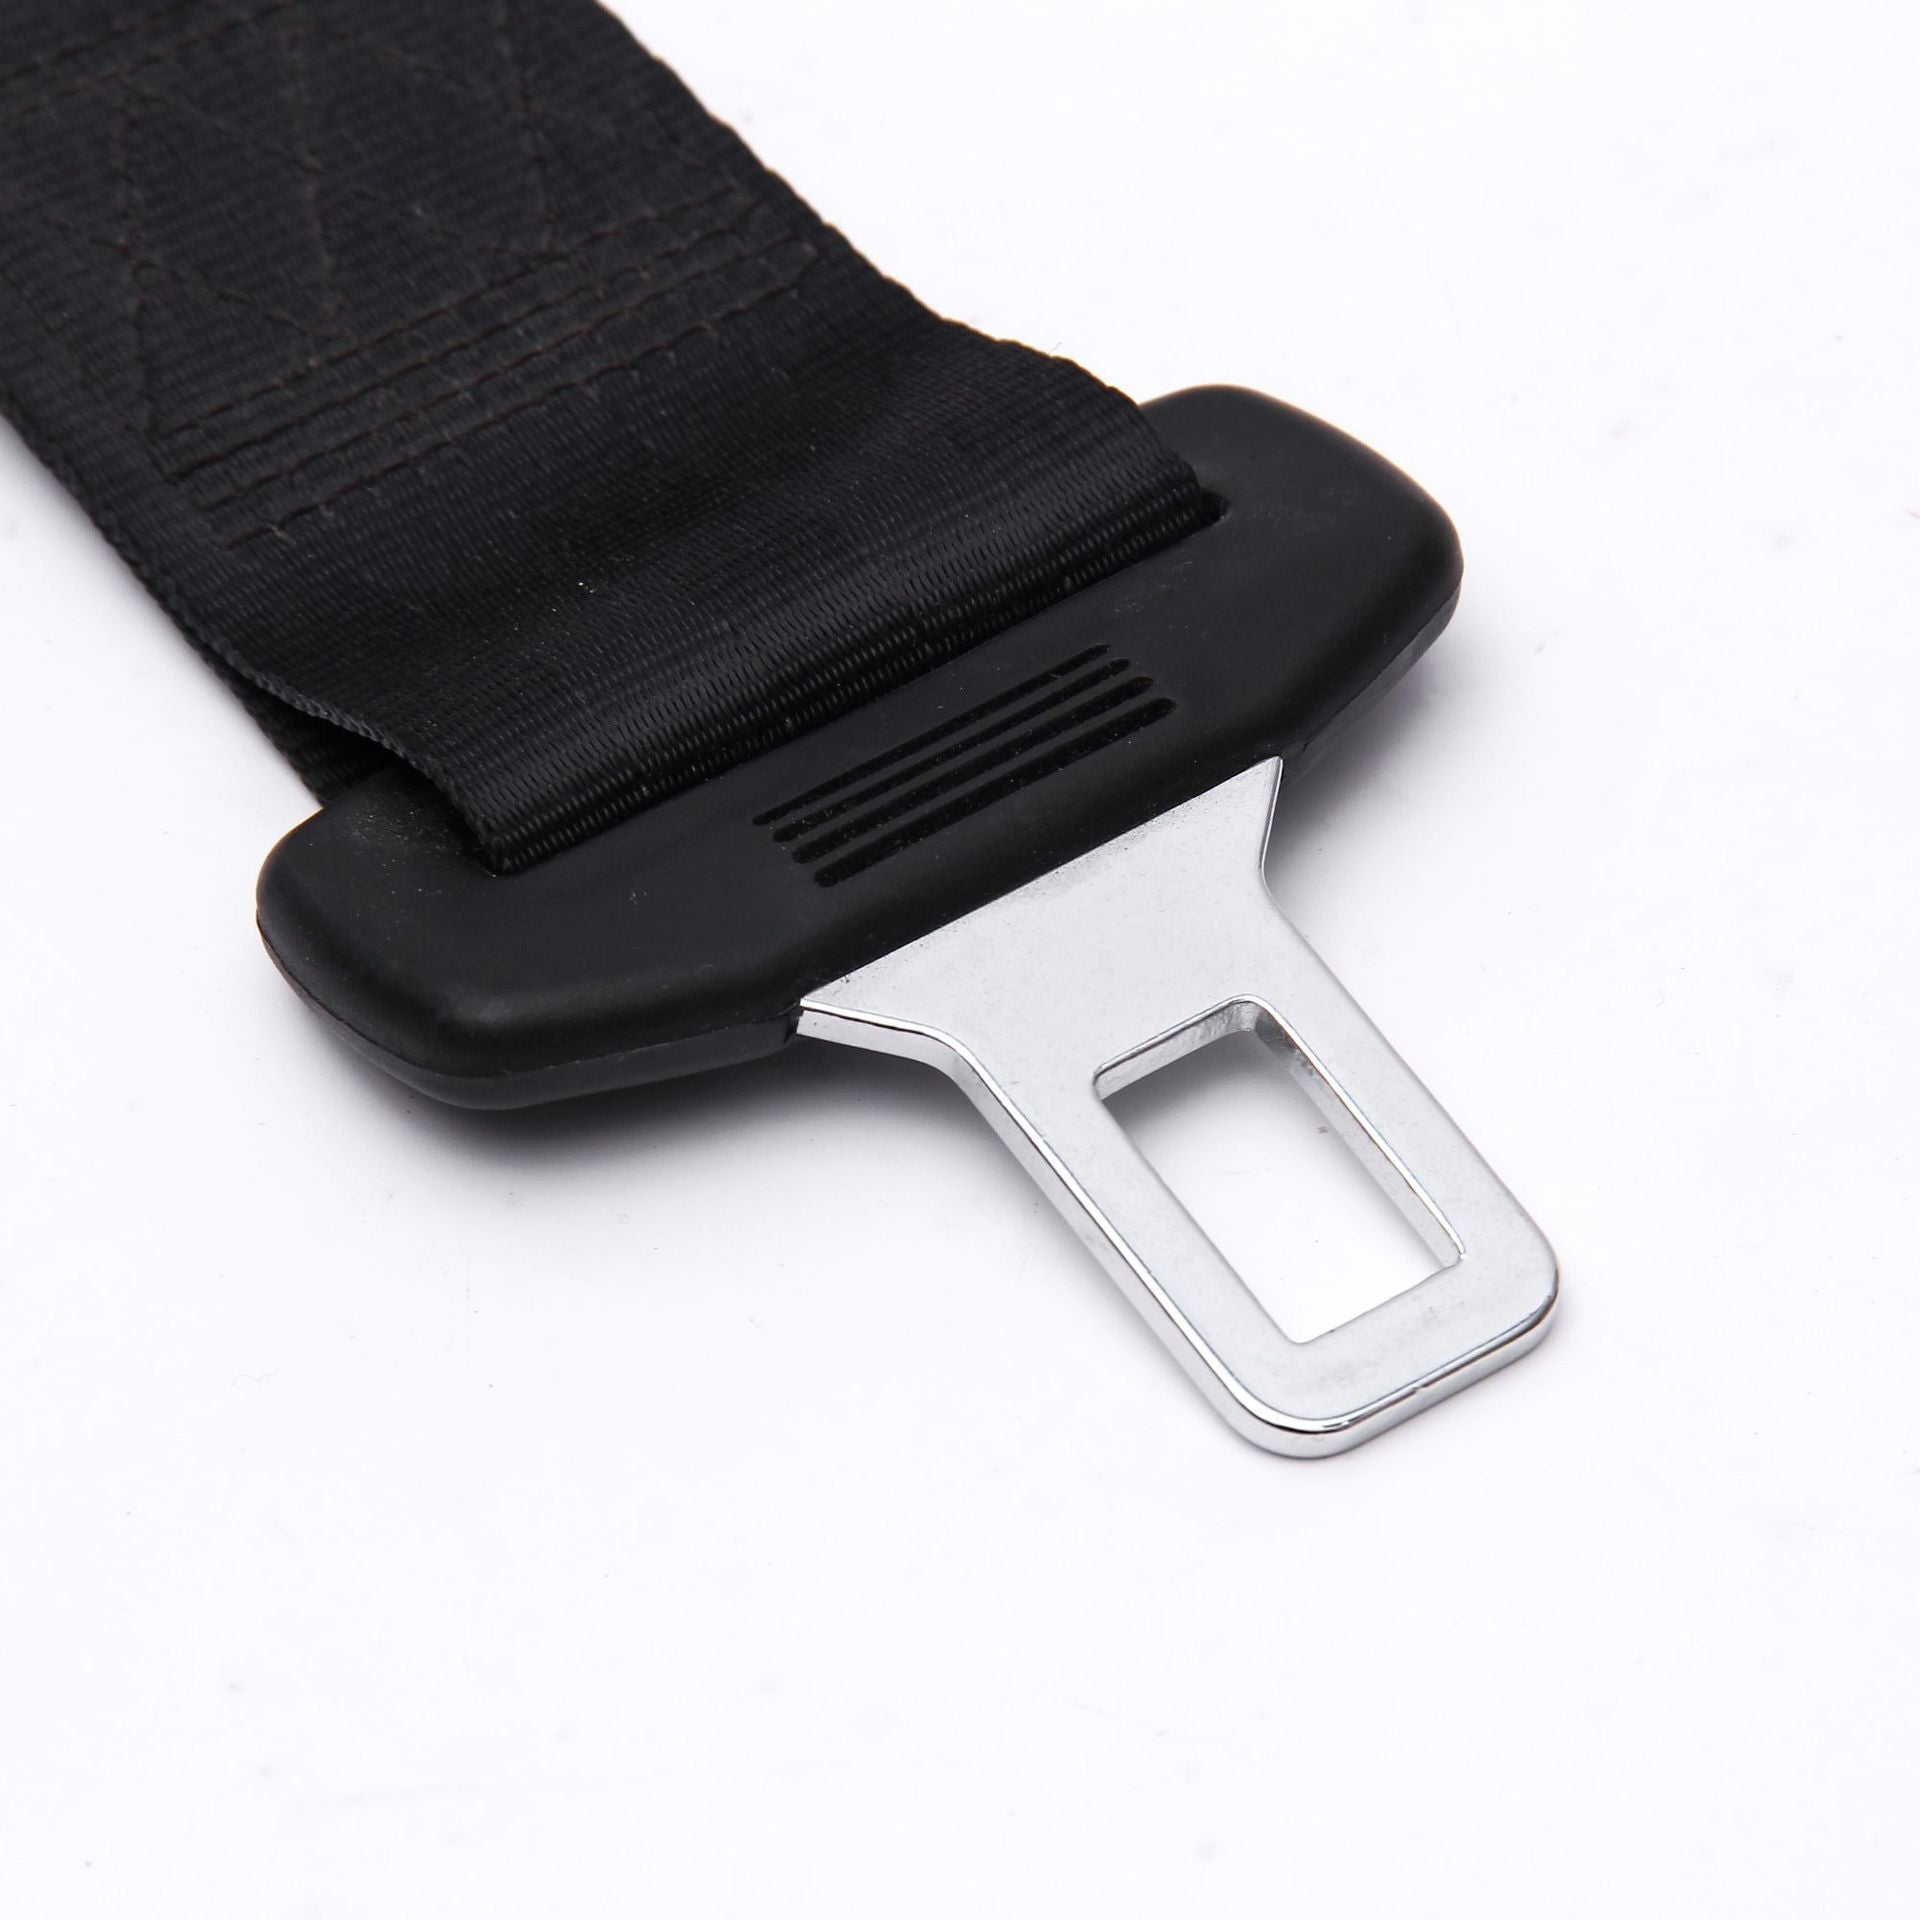 XPDEX Adjustable Car Auto Safety Seat Belt Seatbelt Extension Extender Buckle